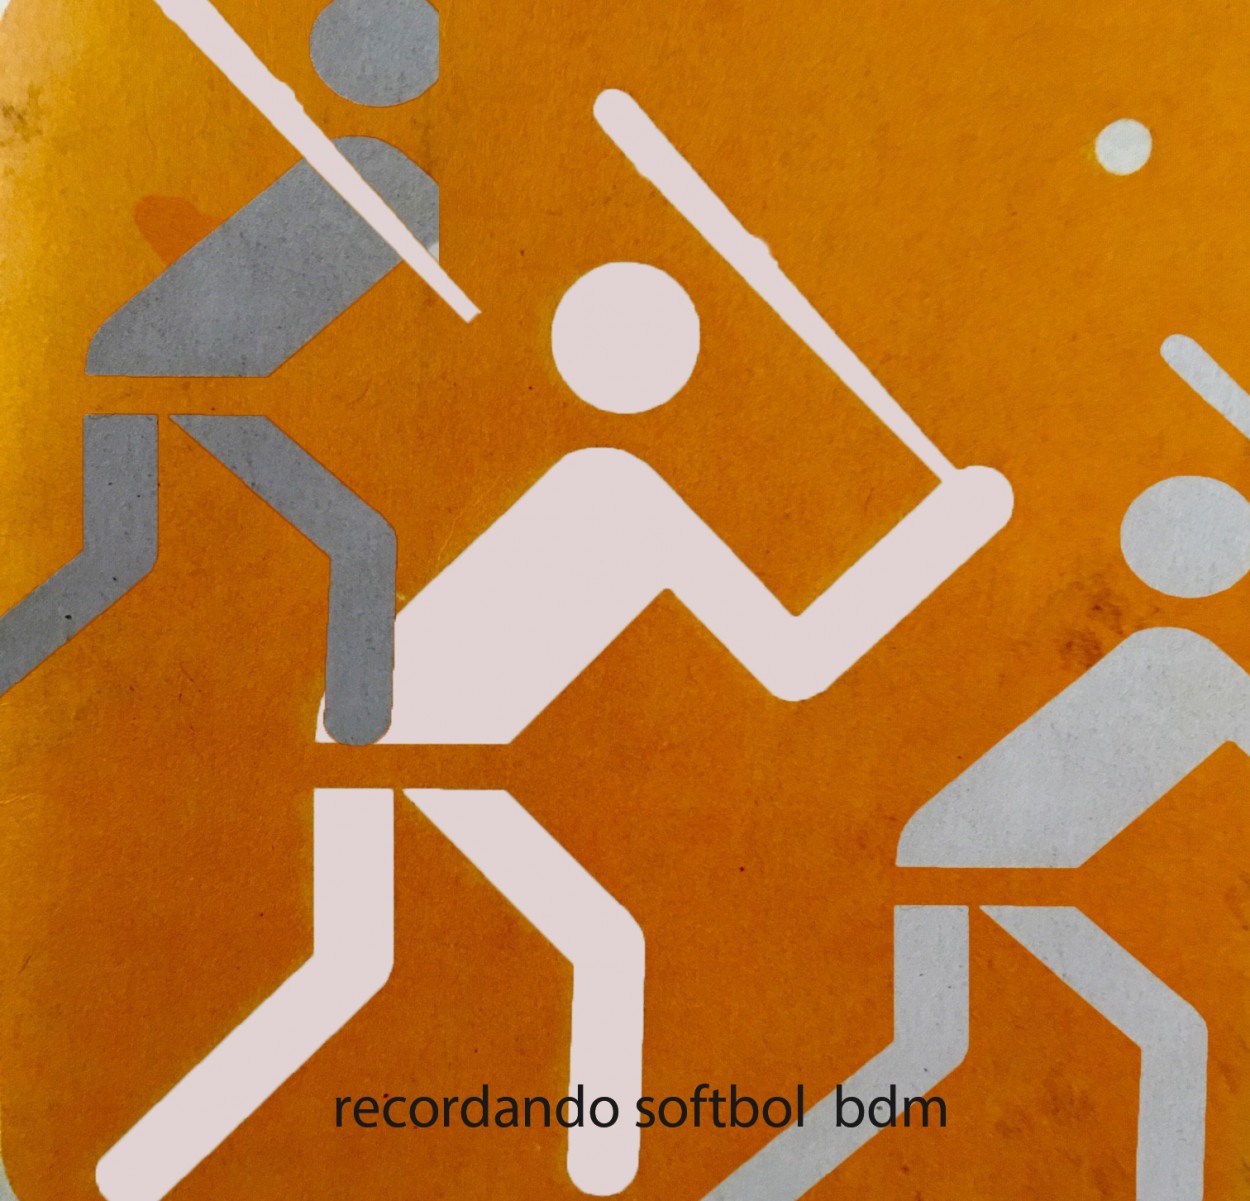 "recordando softbol" de Beatriz Di Marzio